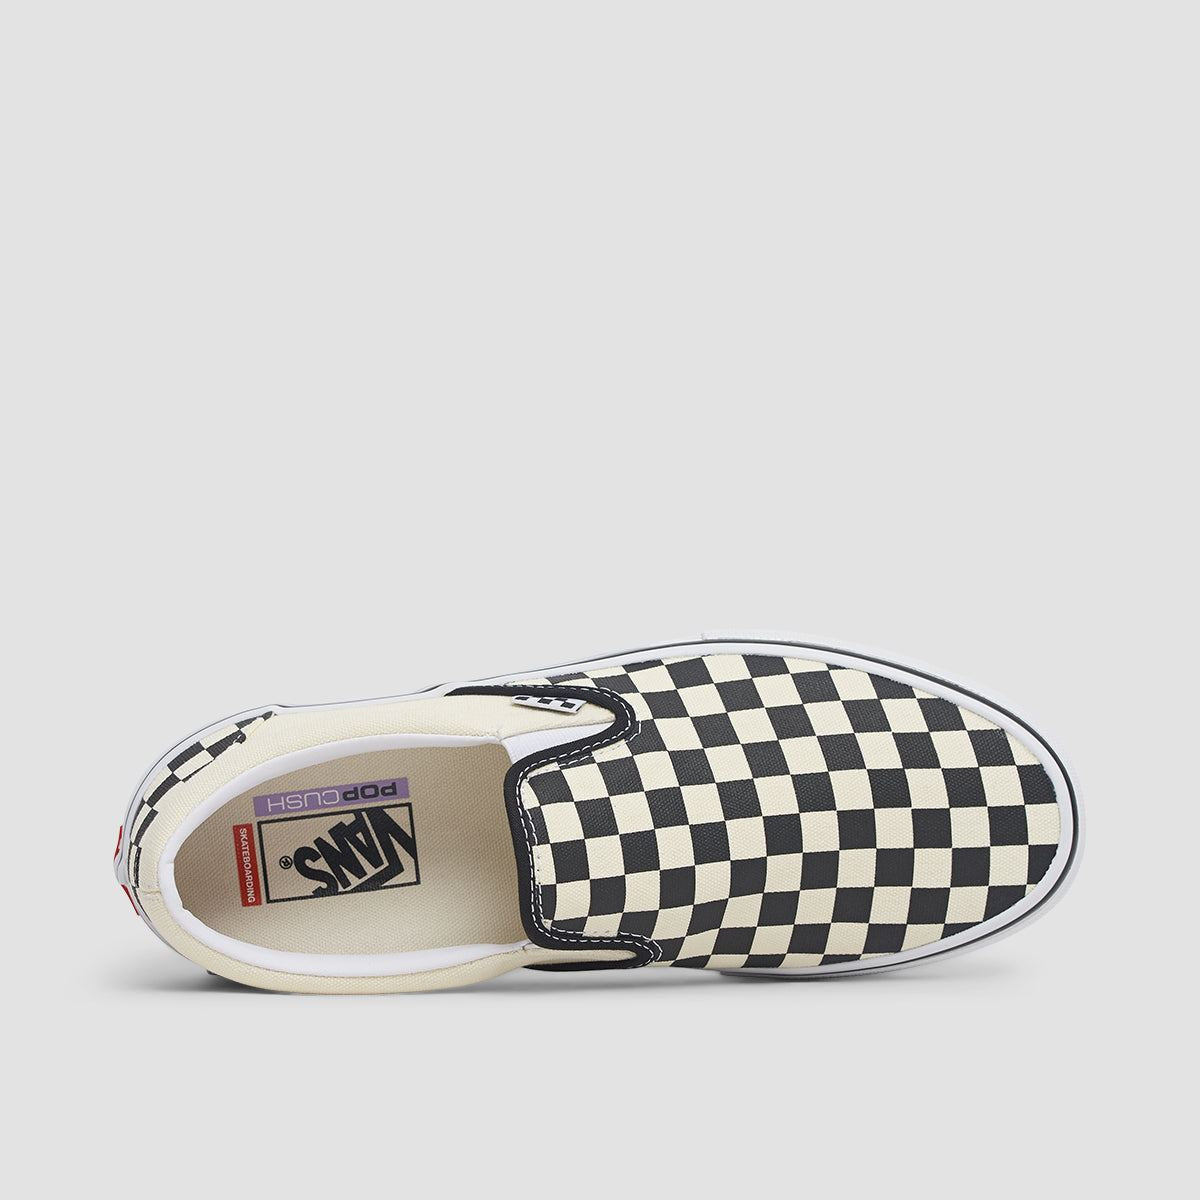 Vans Skate Slip-On Shoes - Checkerboard Black/Off